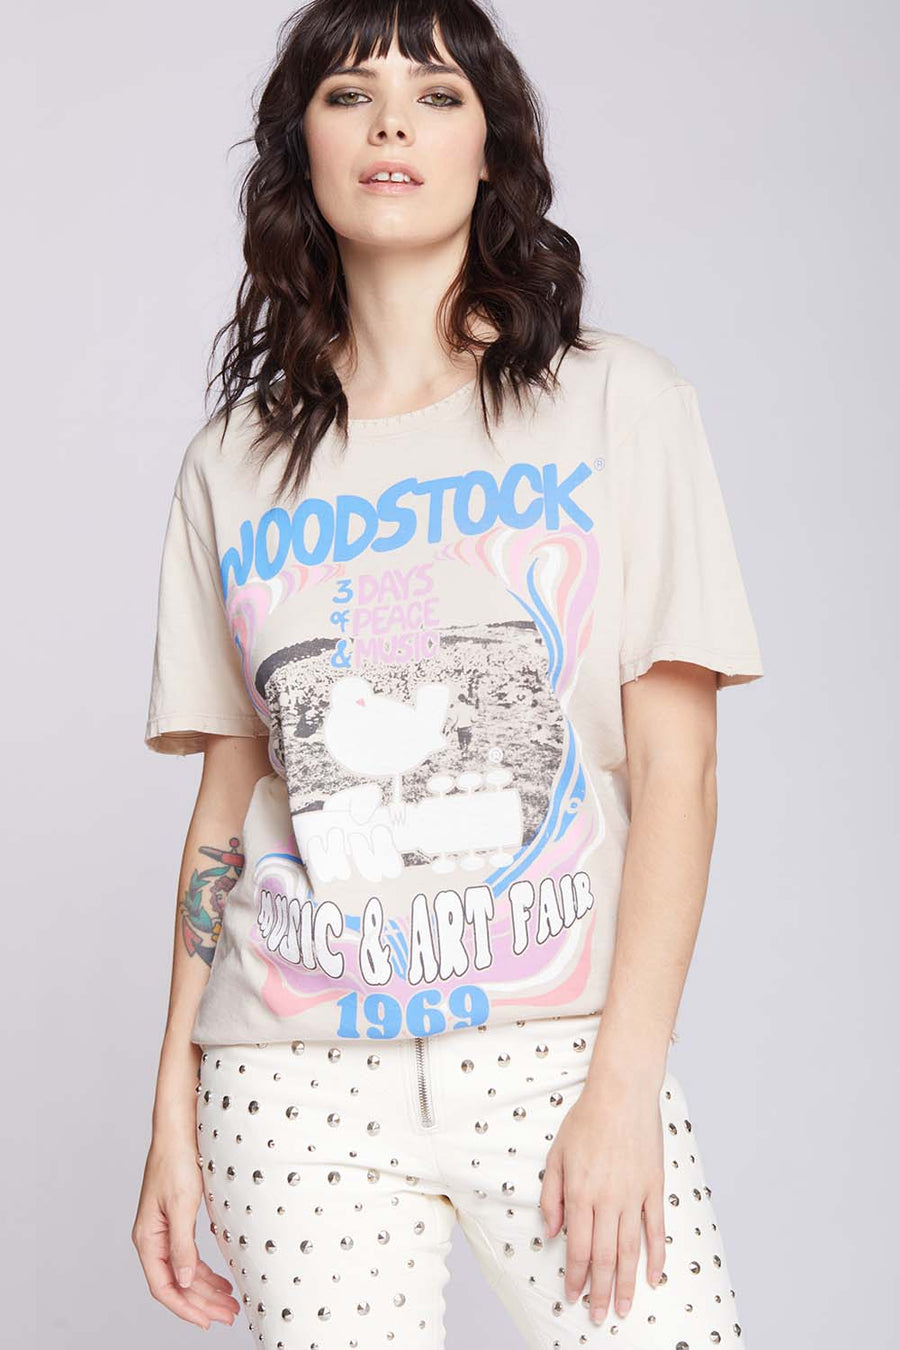 Woodstock Music & Art Fair 1969 T-shirt 301992 Old-Lace